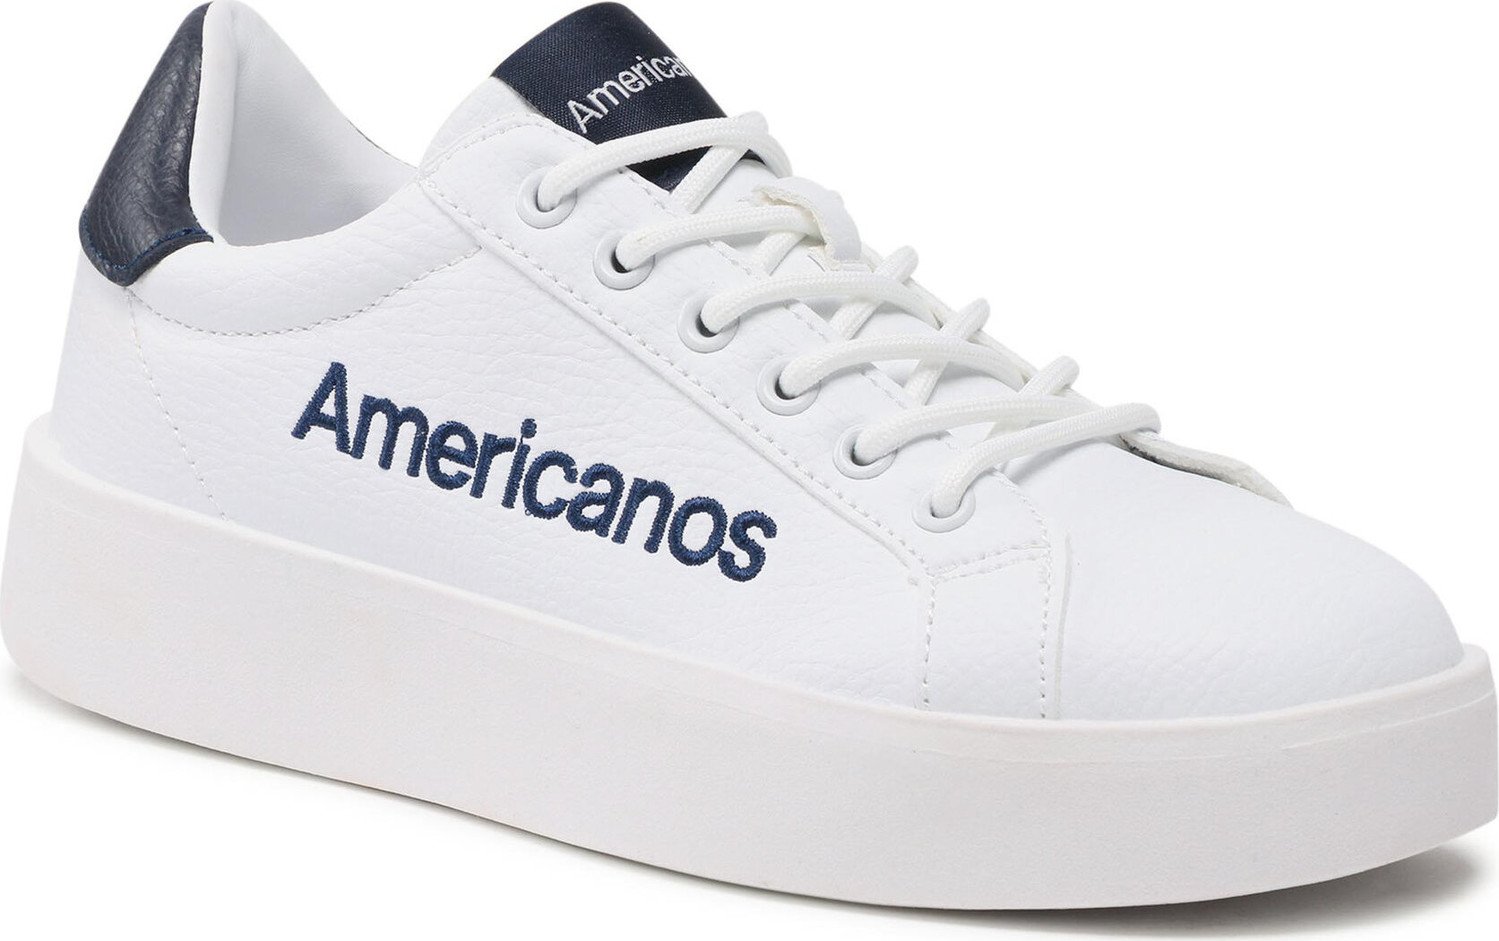 Sneakersy Americanos WPRS-20210506 White